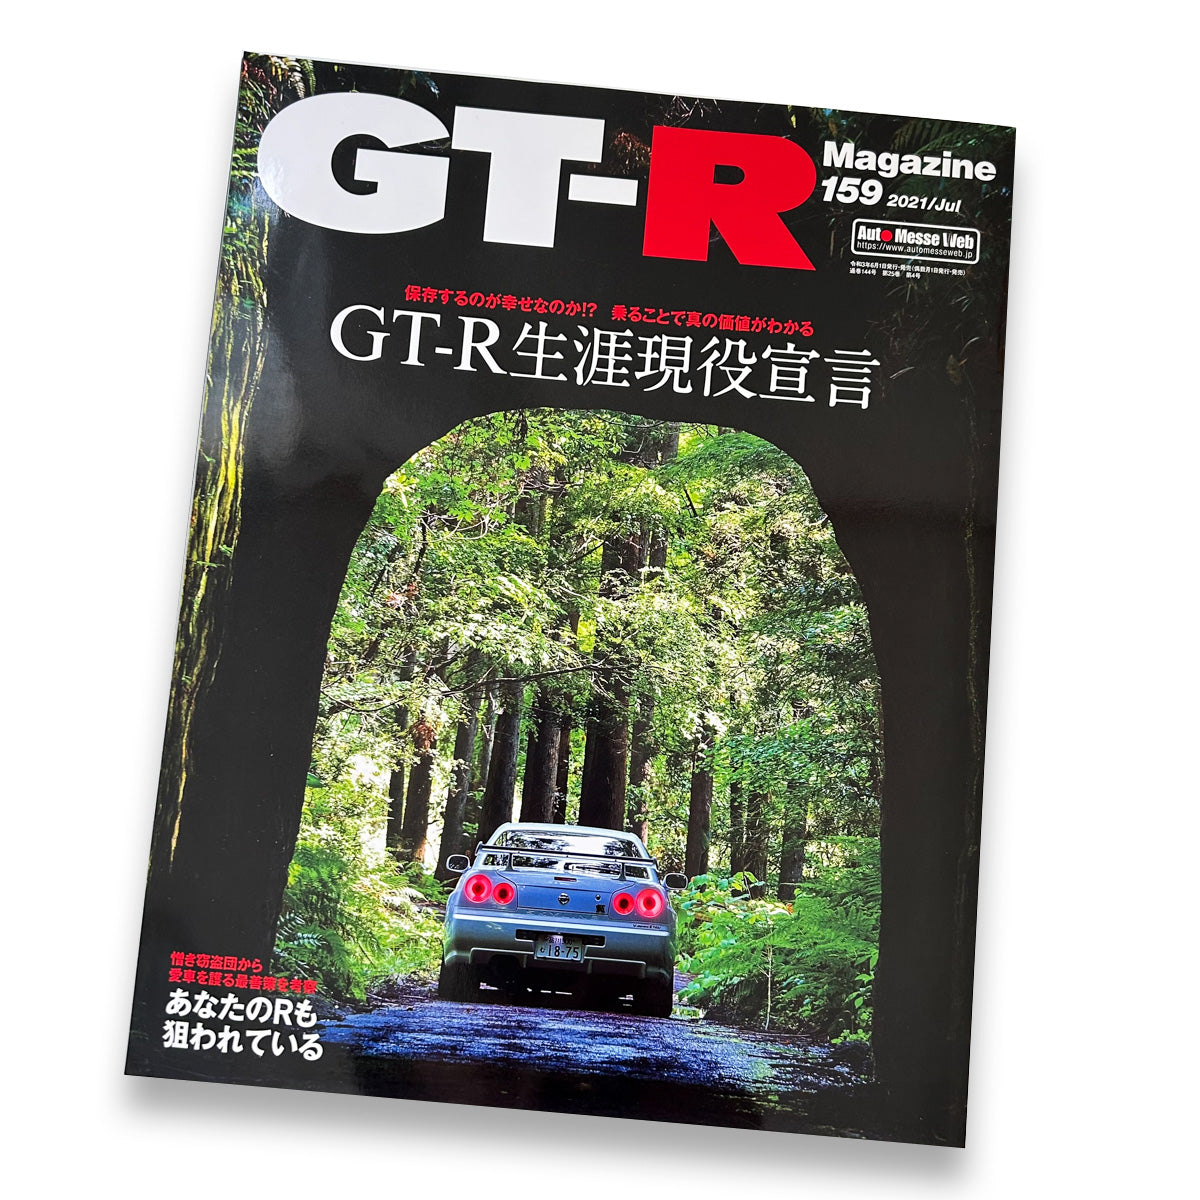 GT-R Magazine vol.159